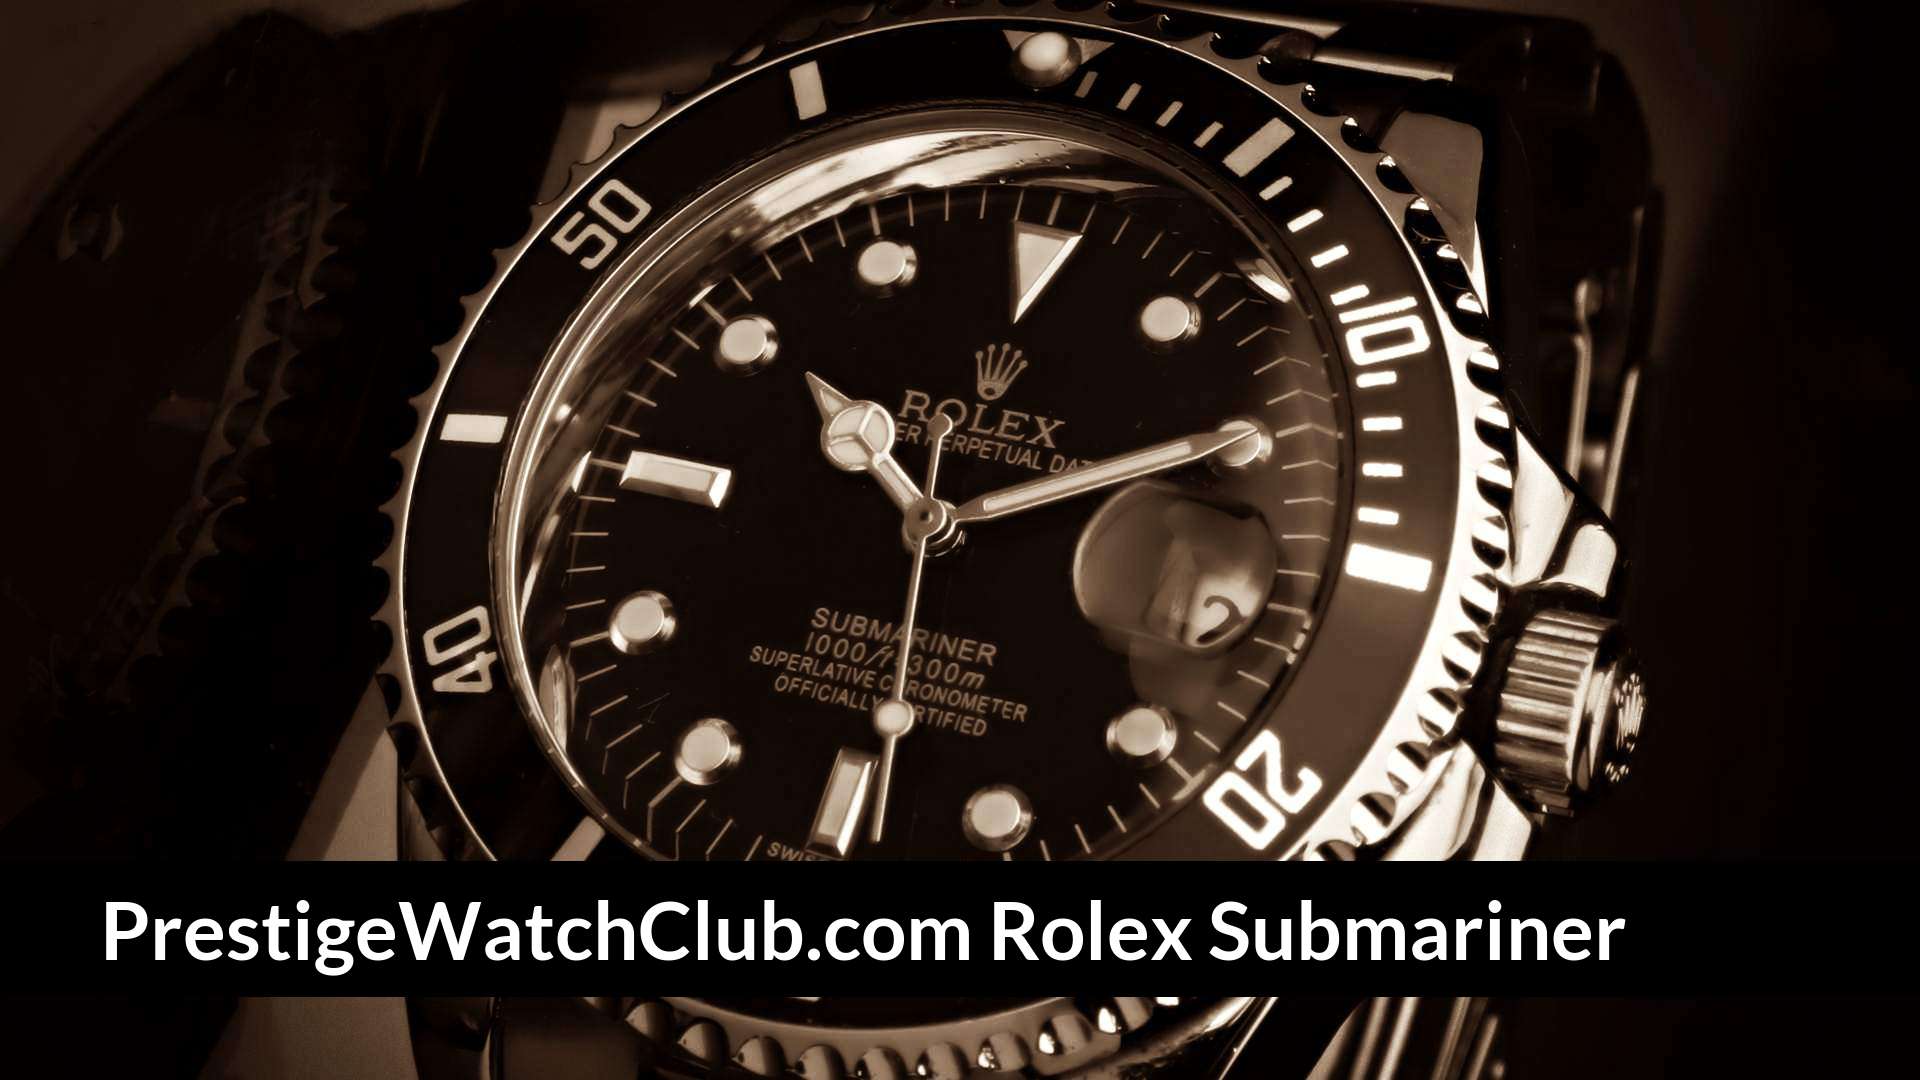 PrestigeWatchClub.com Rolex Submariner